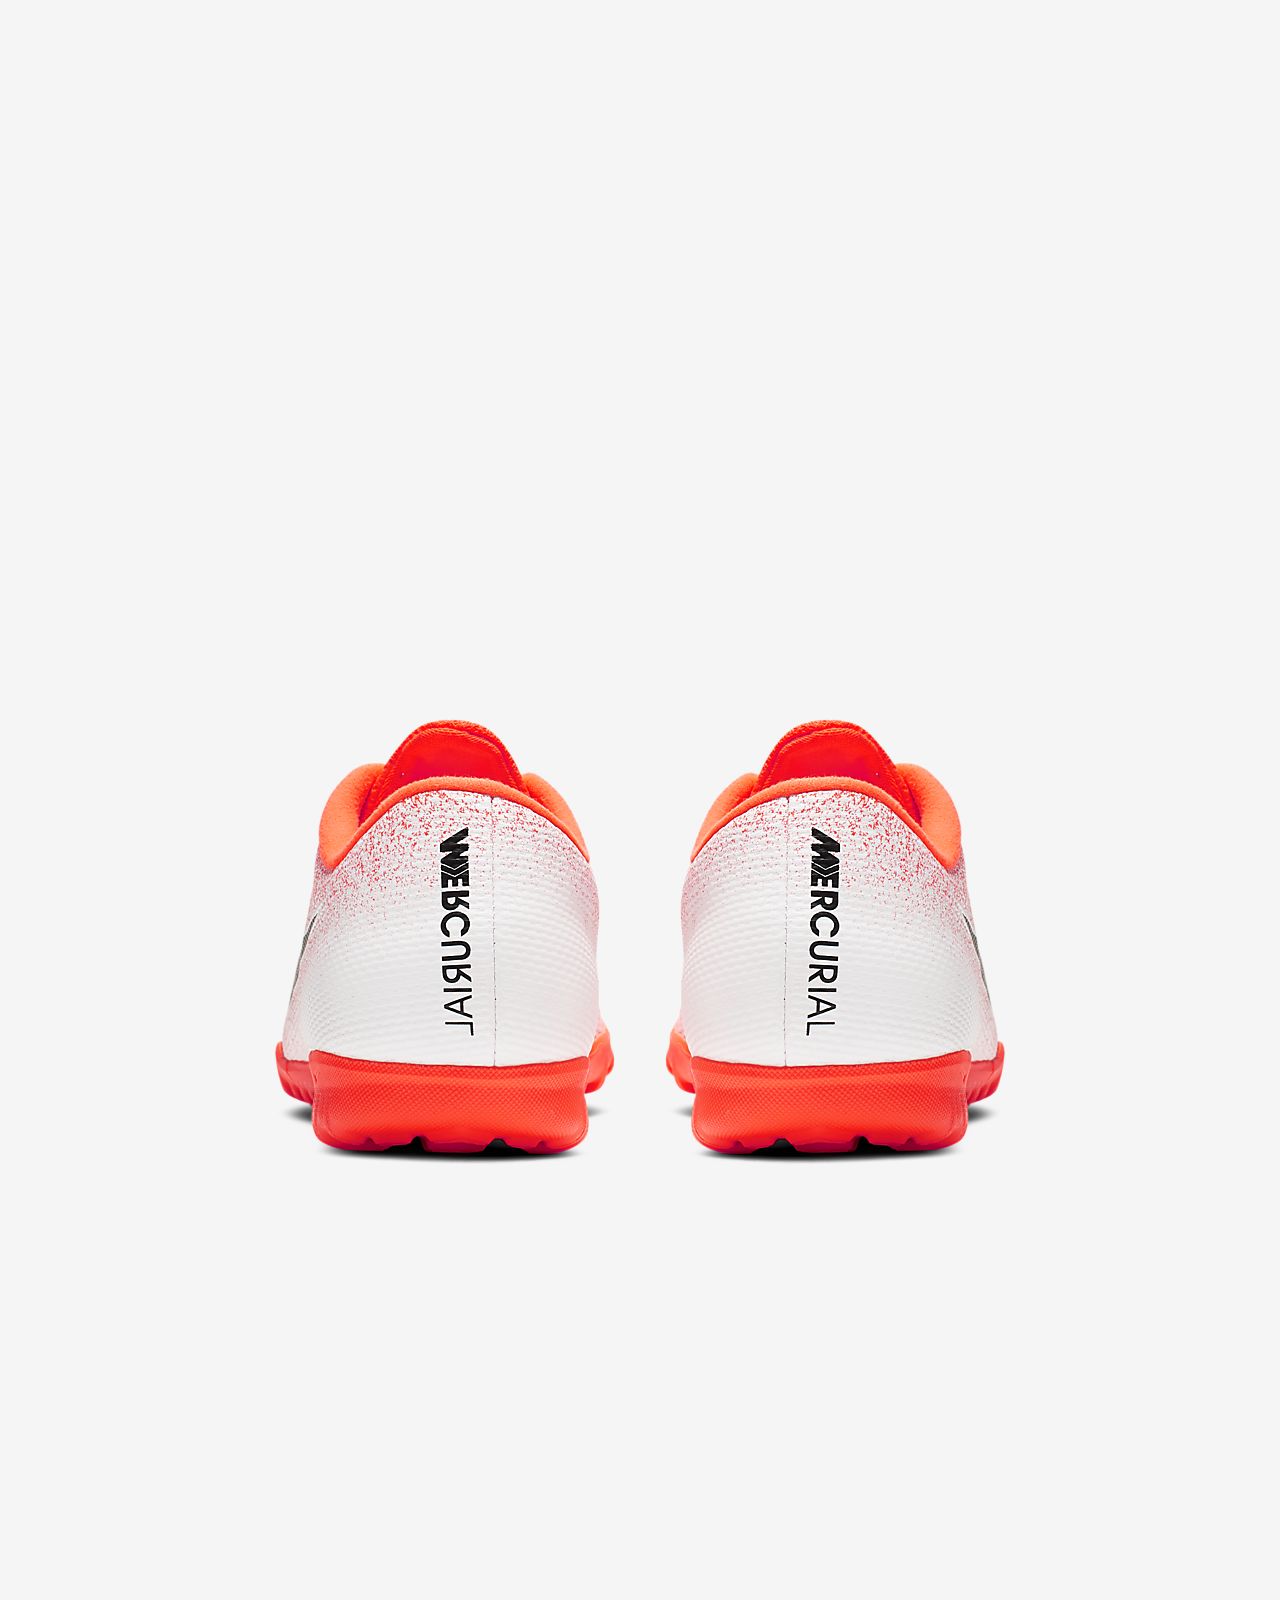 Off White x Nike Mercurial Vapor 360 Release Date